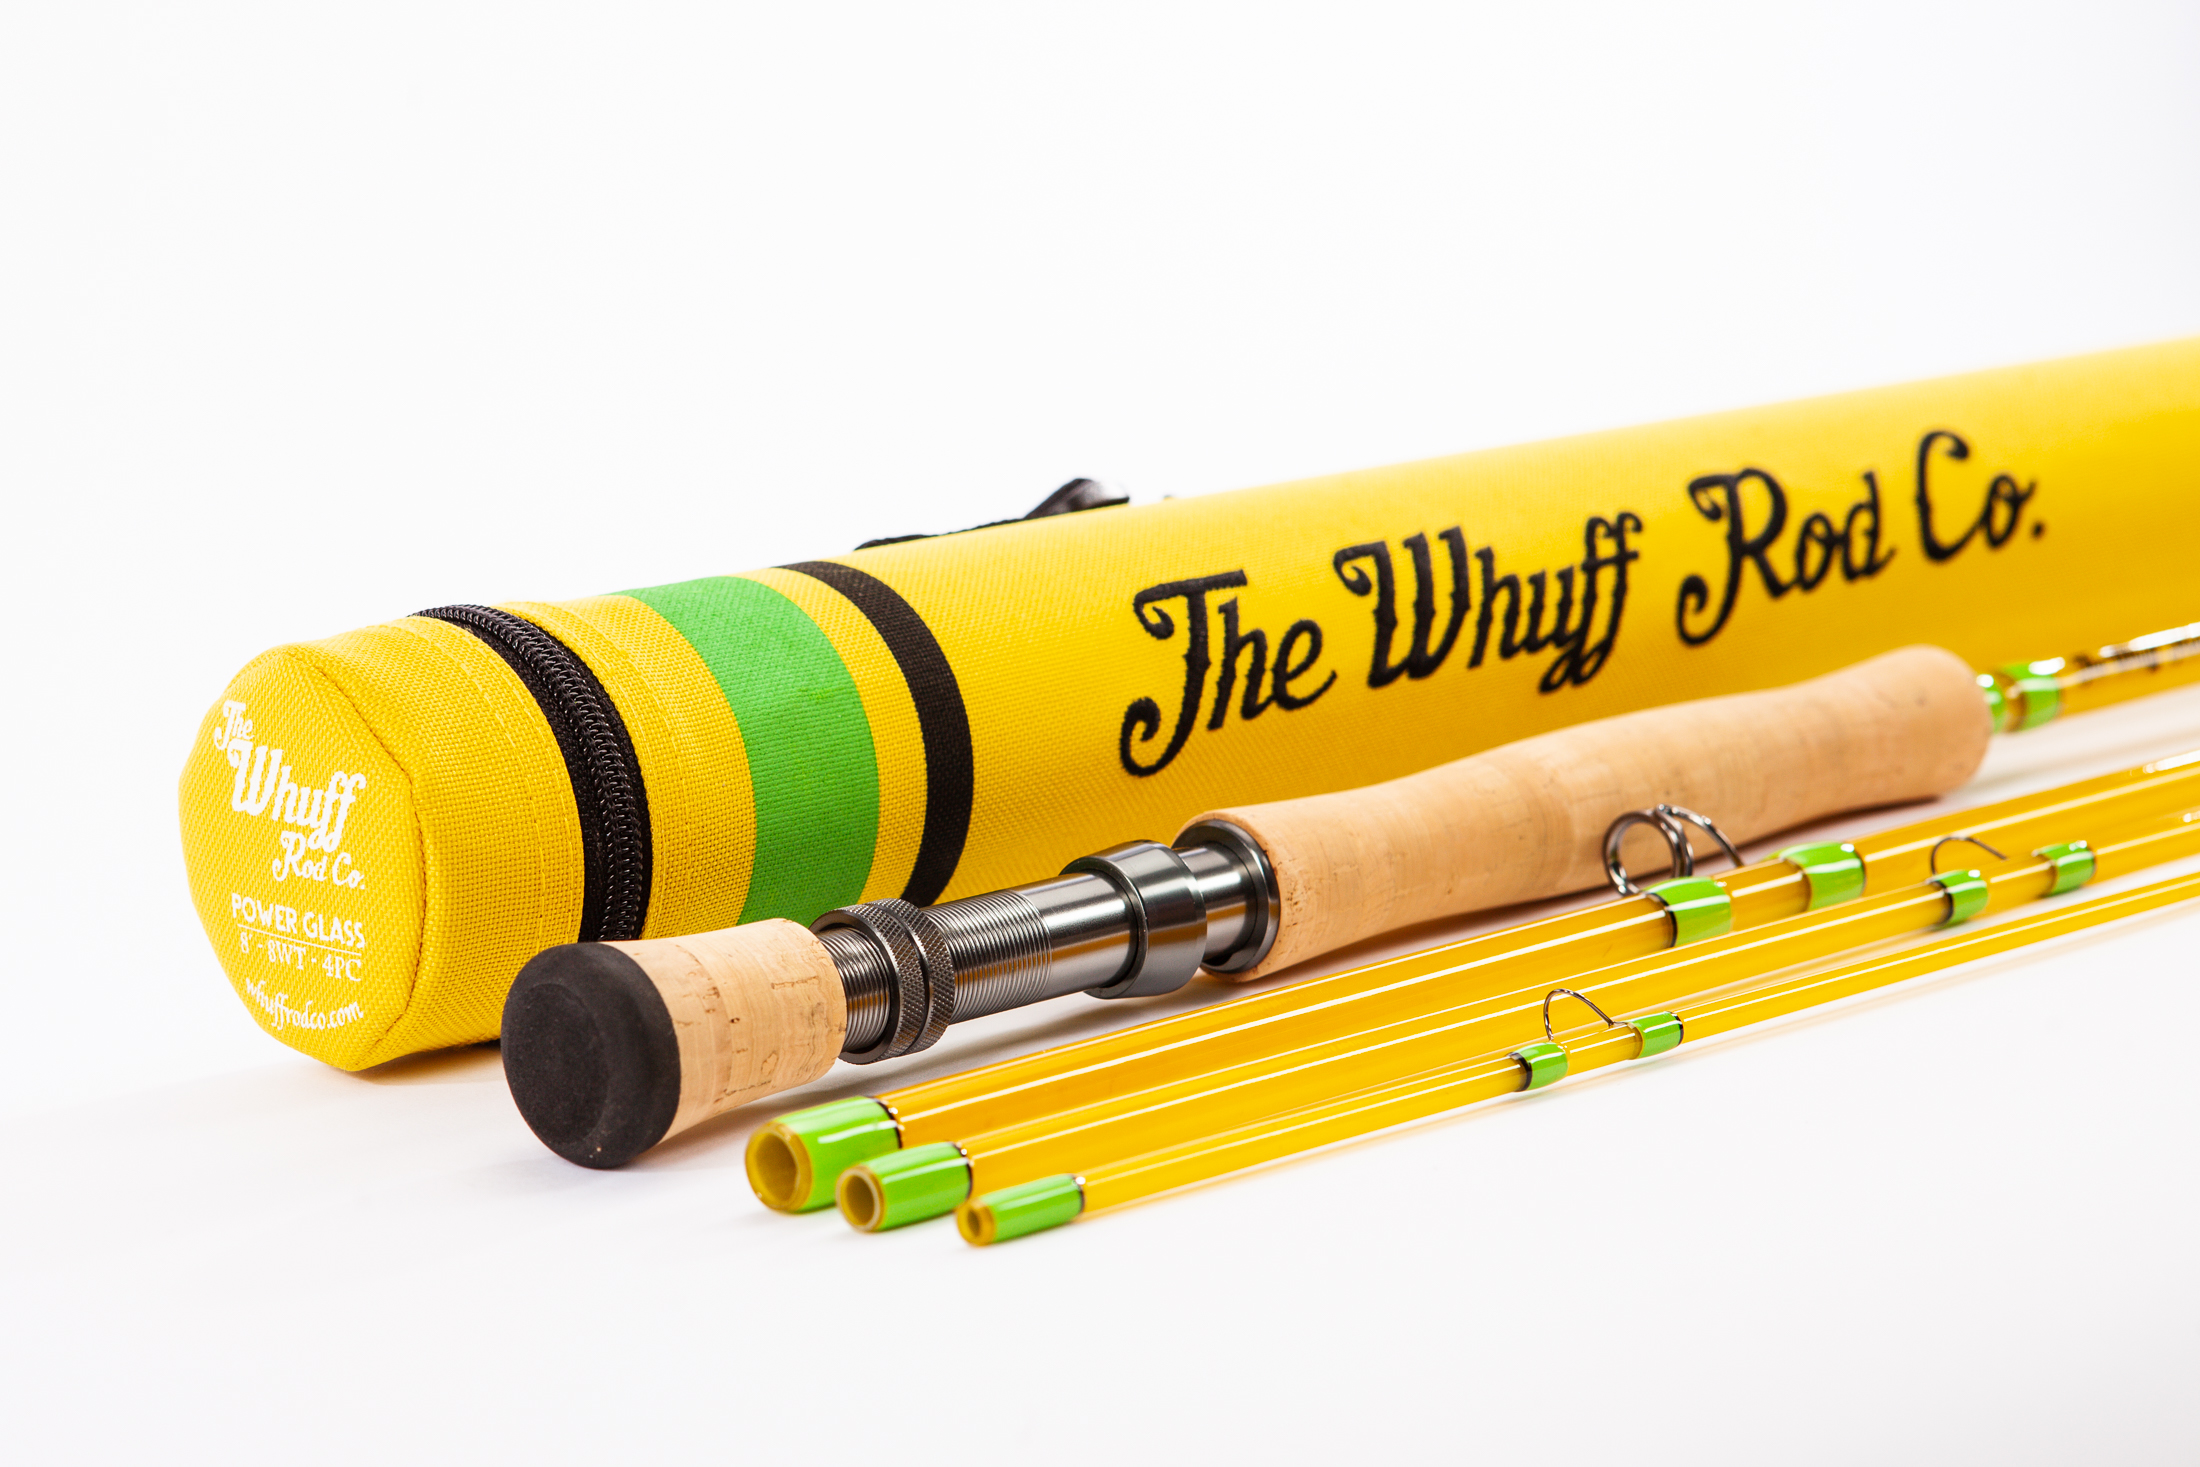 WRC Powerglass – 8′ – 8wt – The Whuff Rod Company